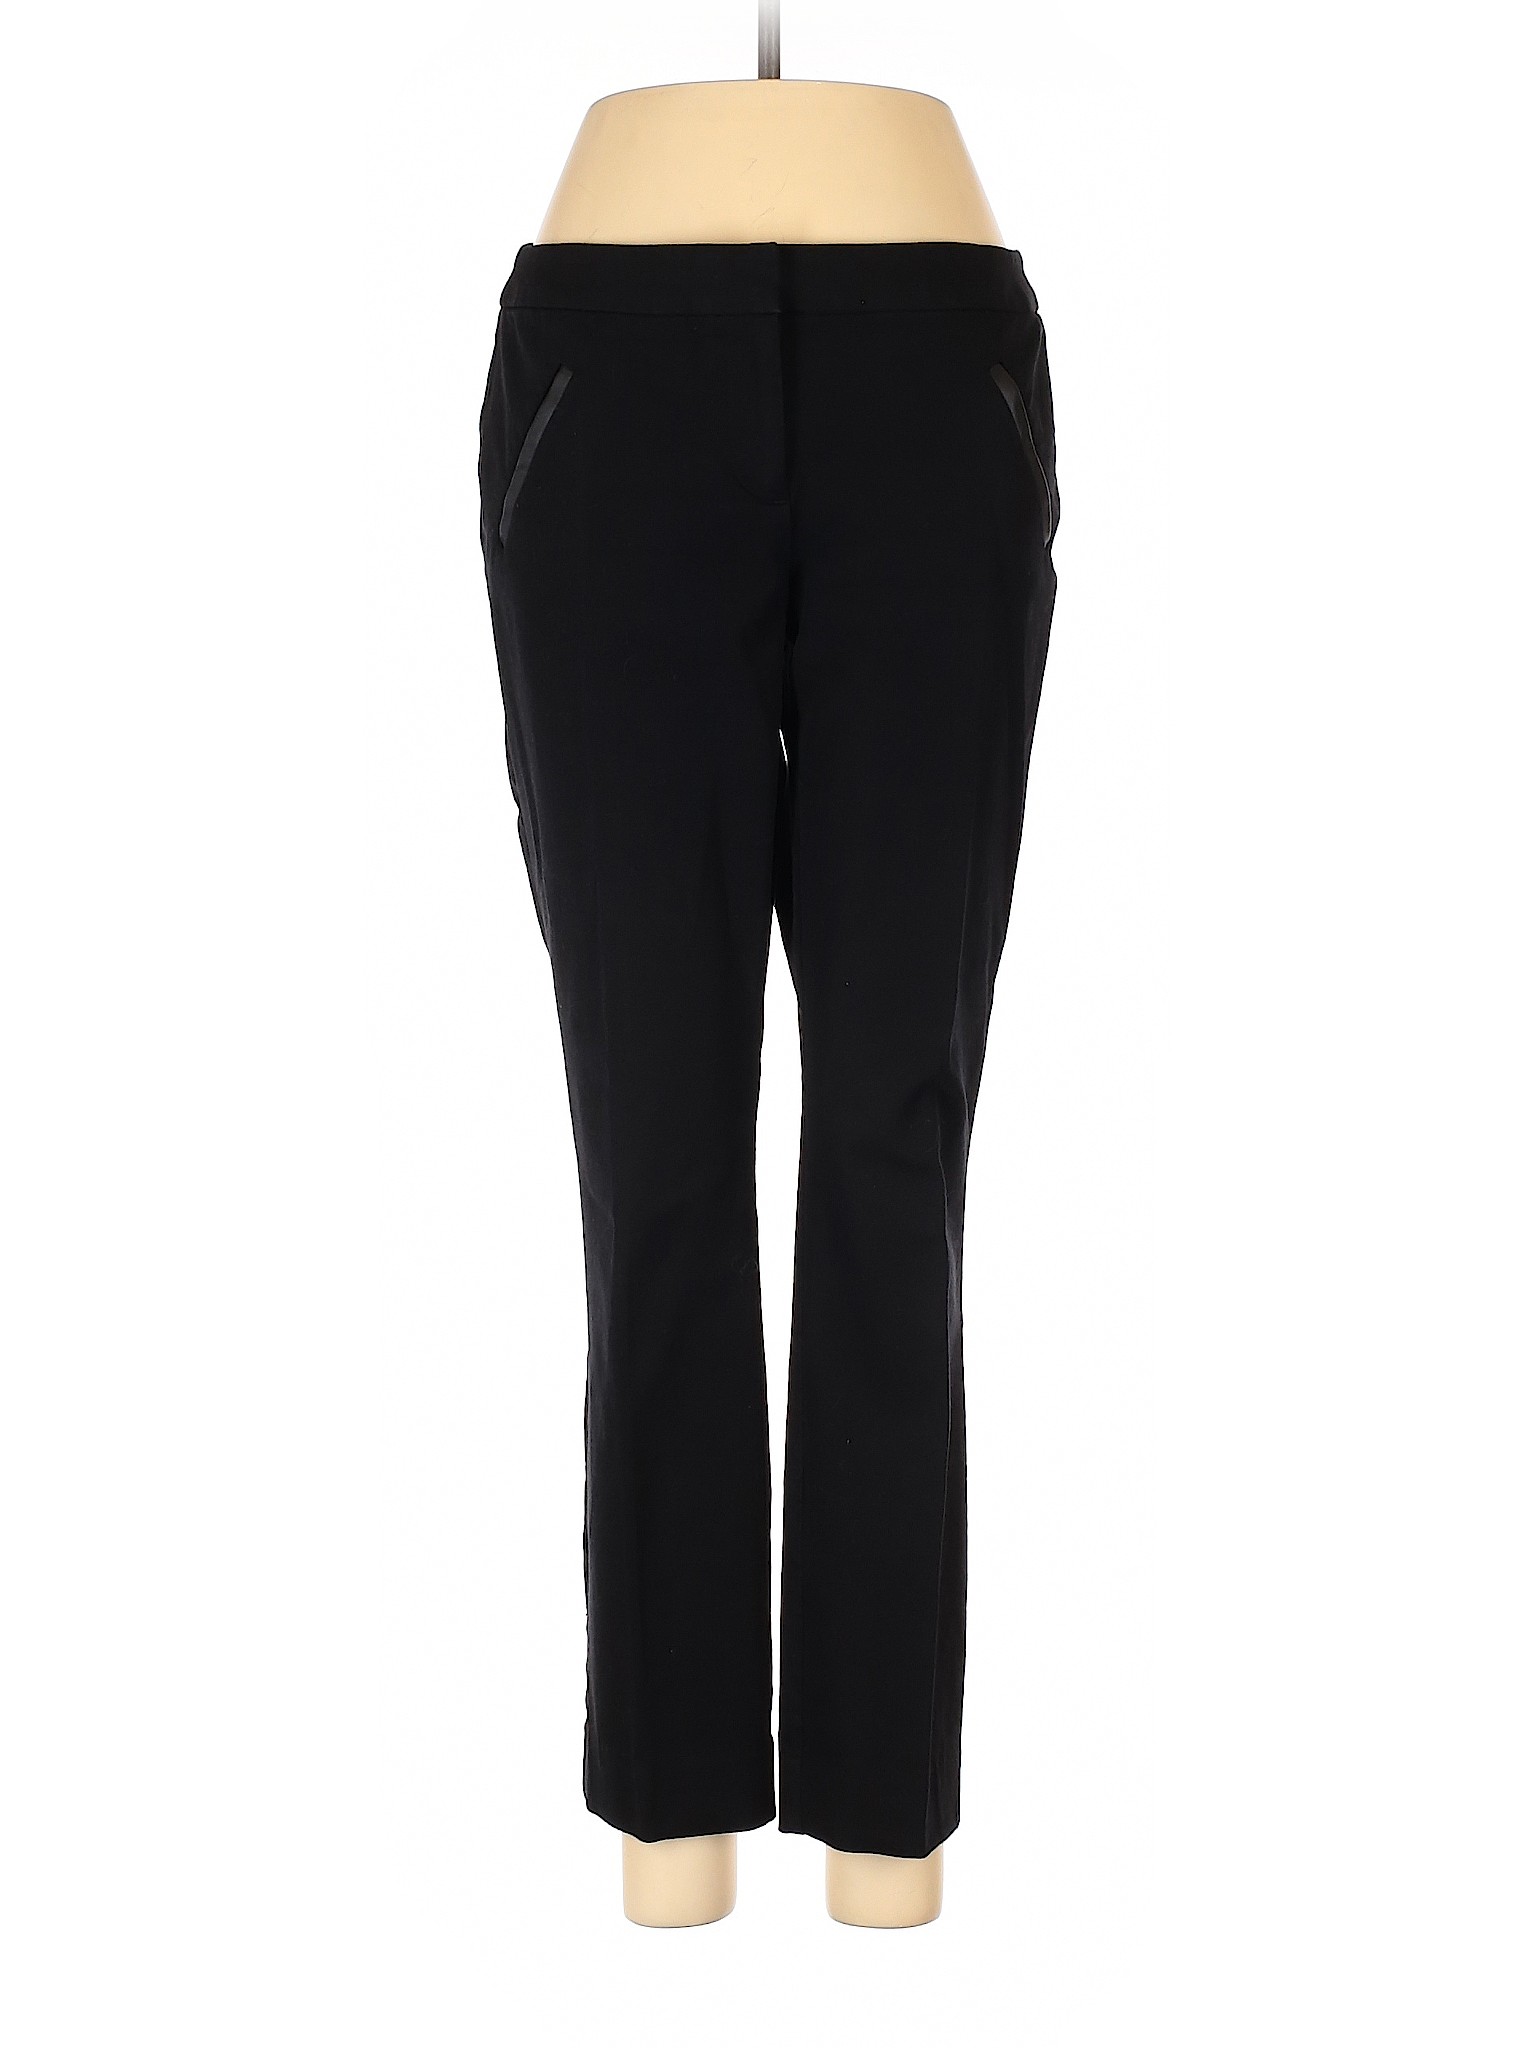 Alfani Women Black Dress Pants 4 | eBay